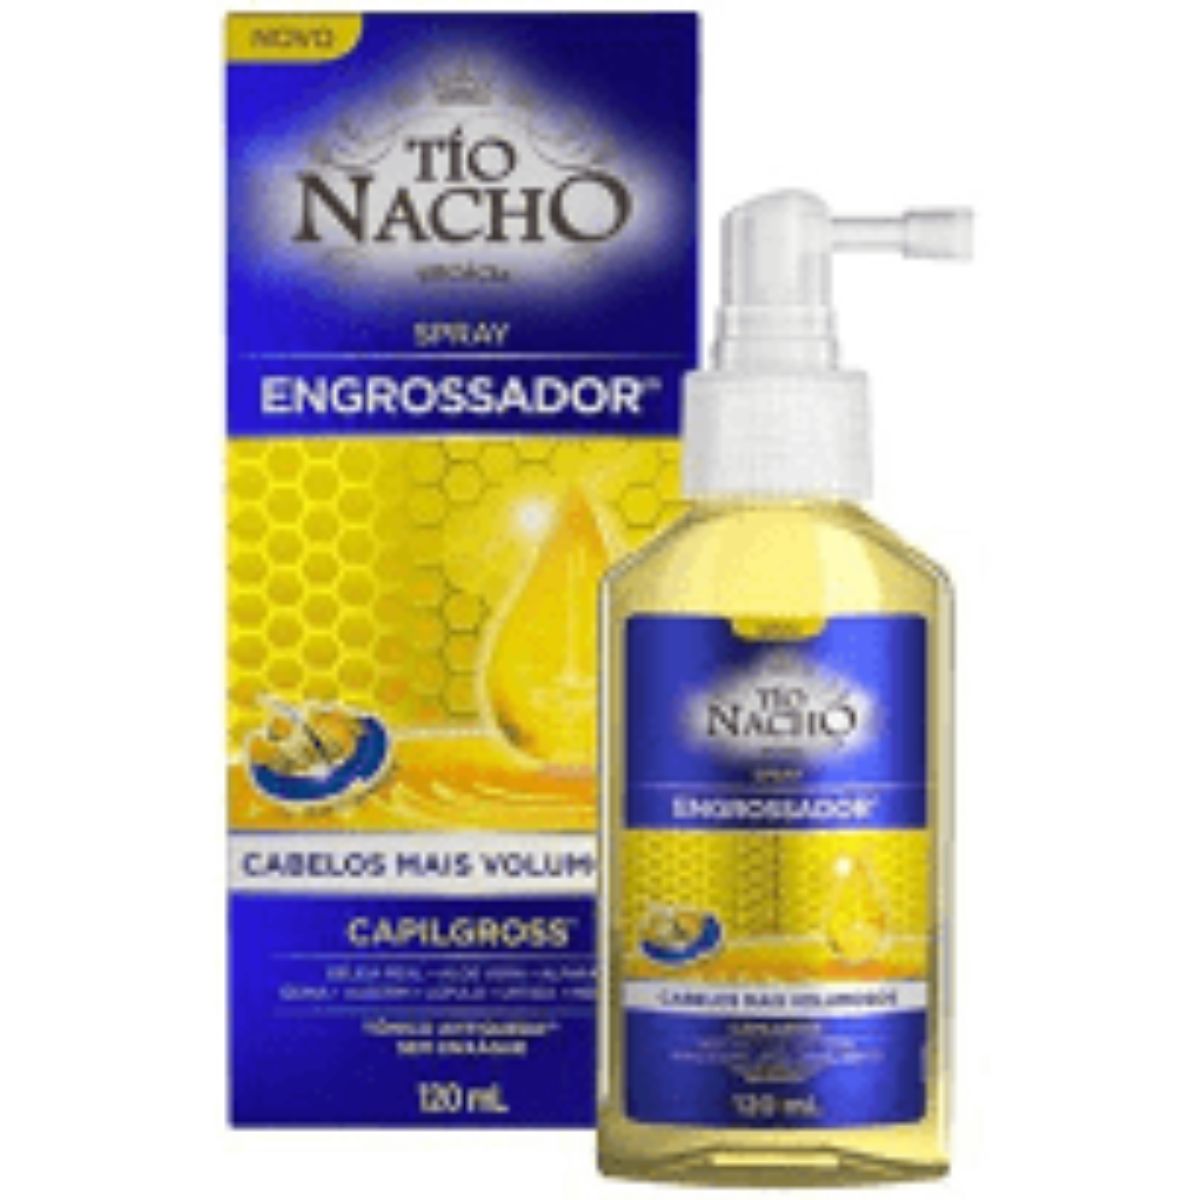 tio-nacho-spray-engrossador-120ml-1.jpg